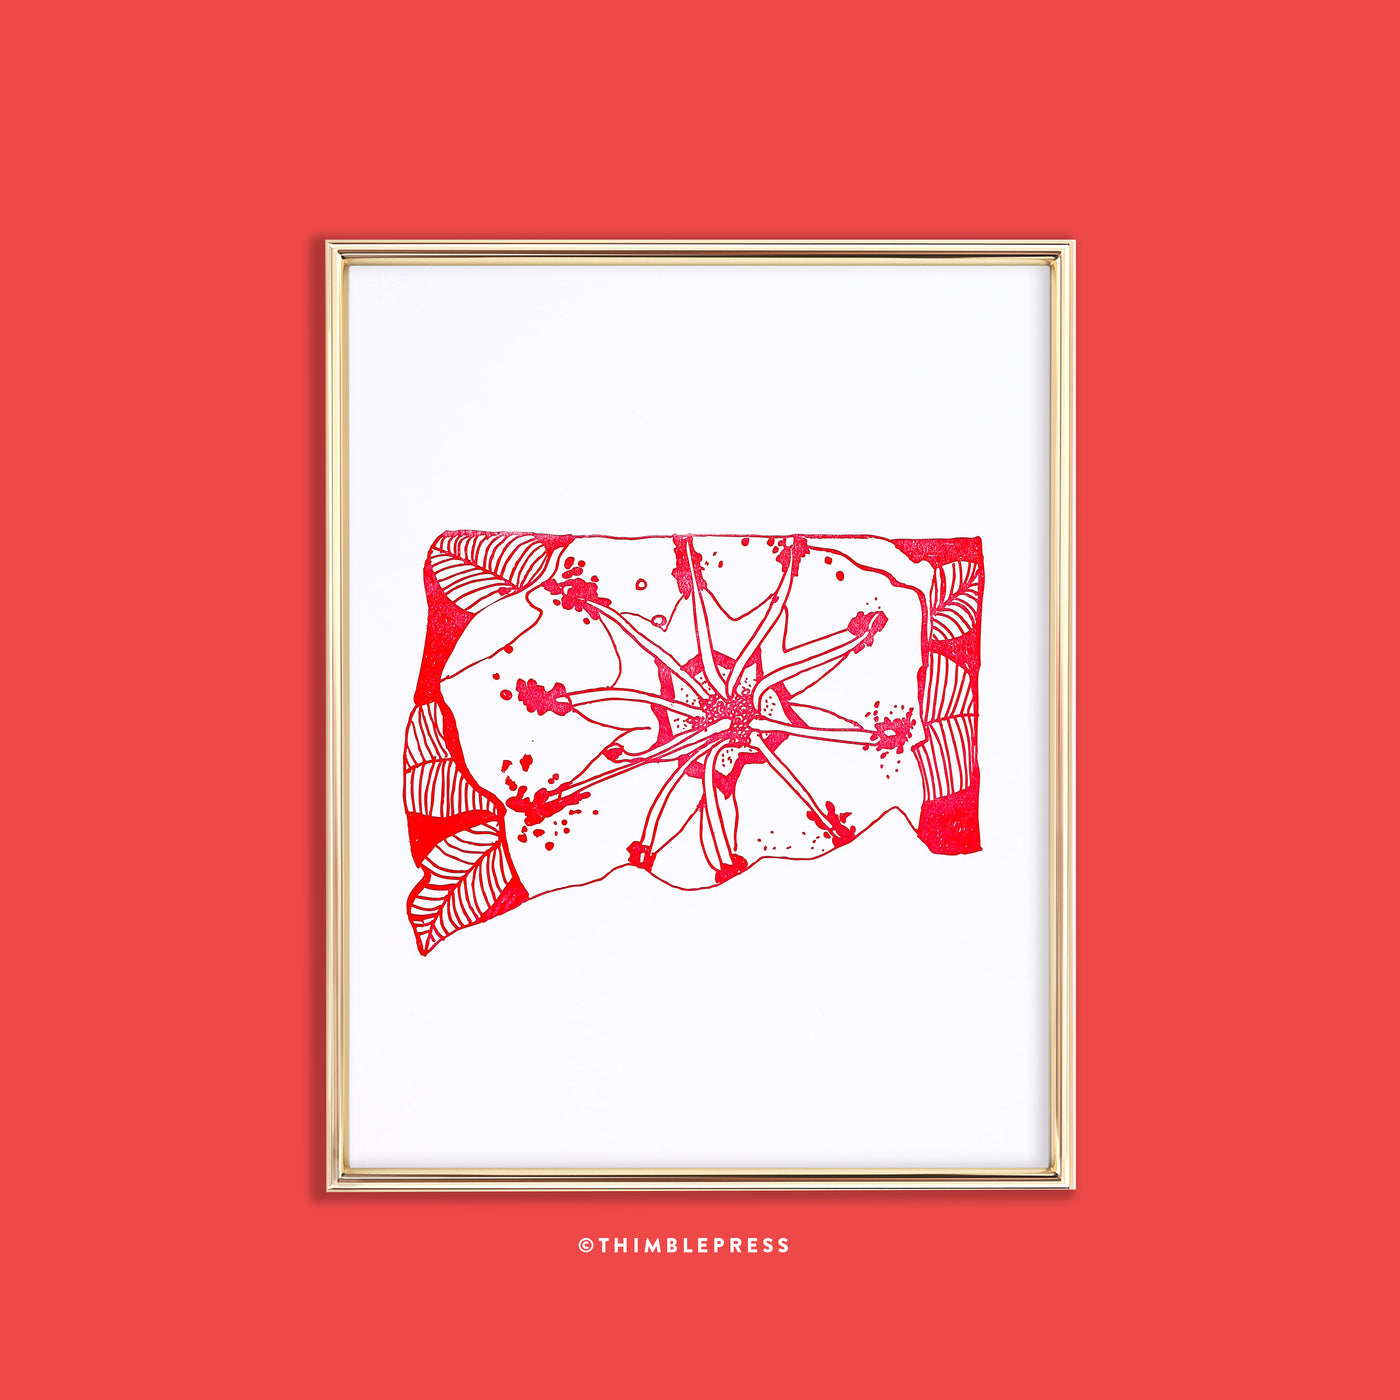 connecticut mountain laurel state flower letterpress art print